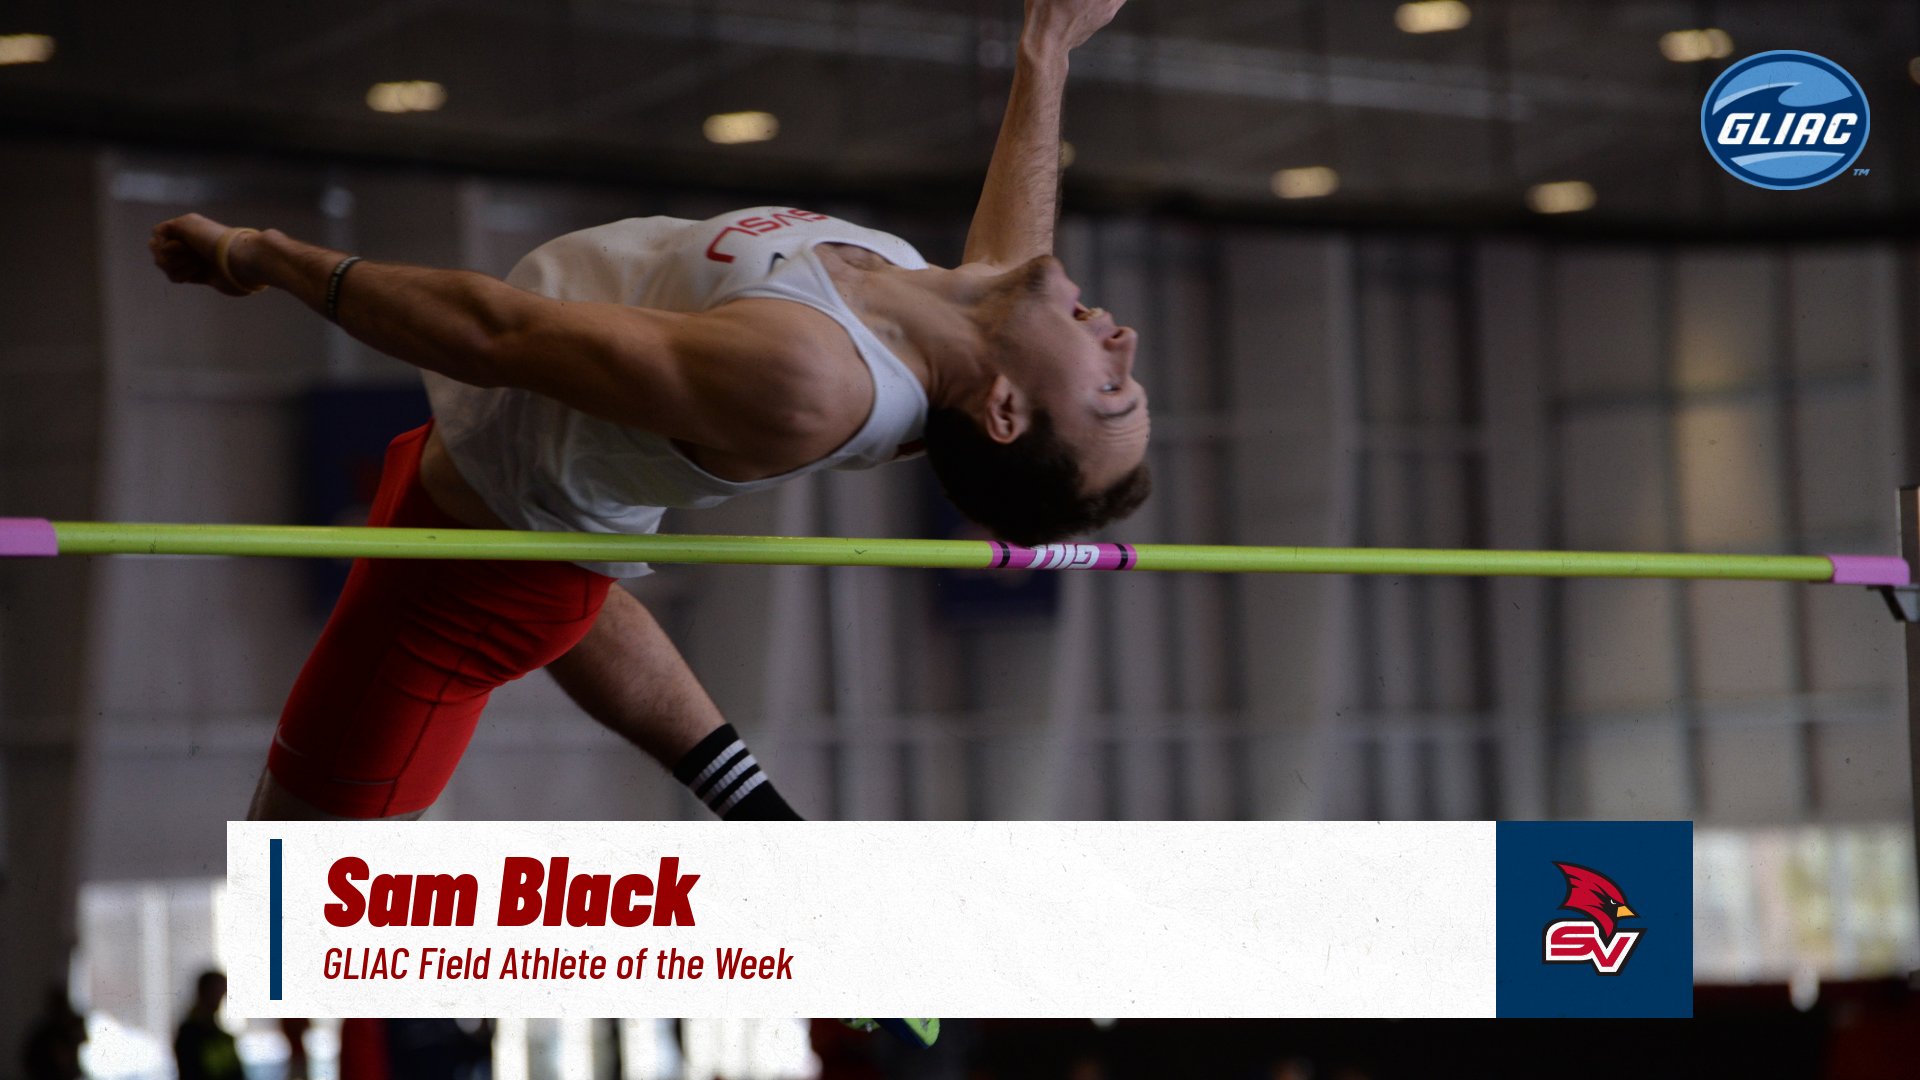 Sam Black earns second GLIAC Field Athlete of the Week honor